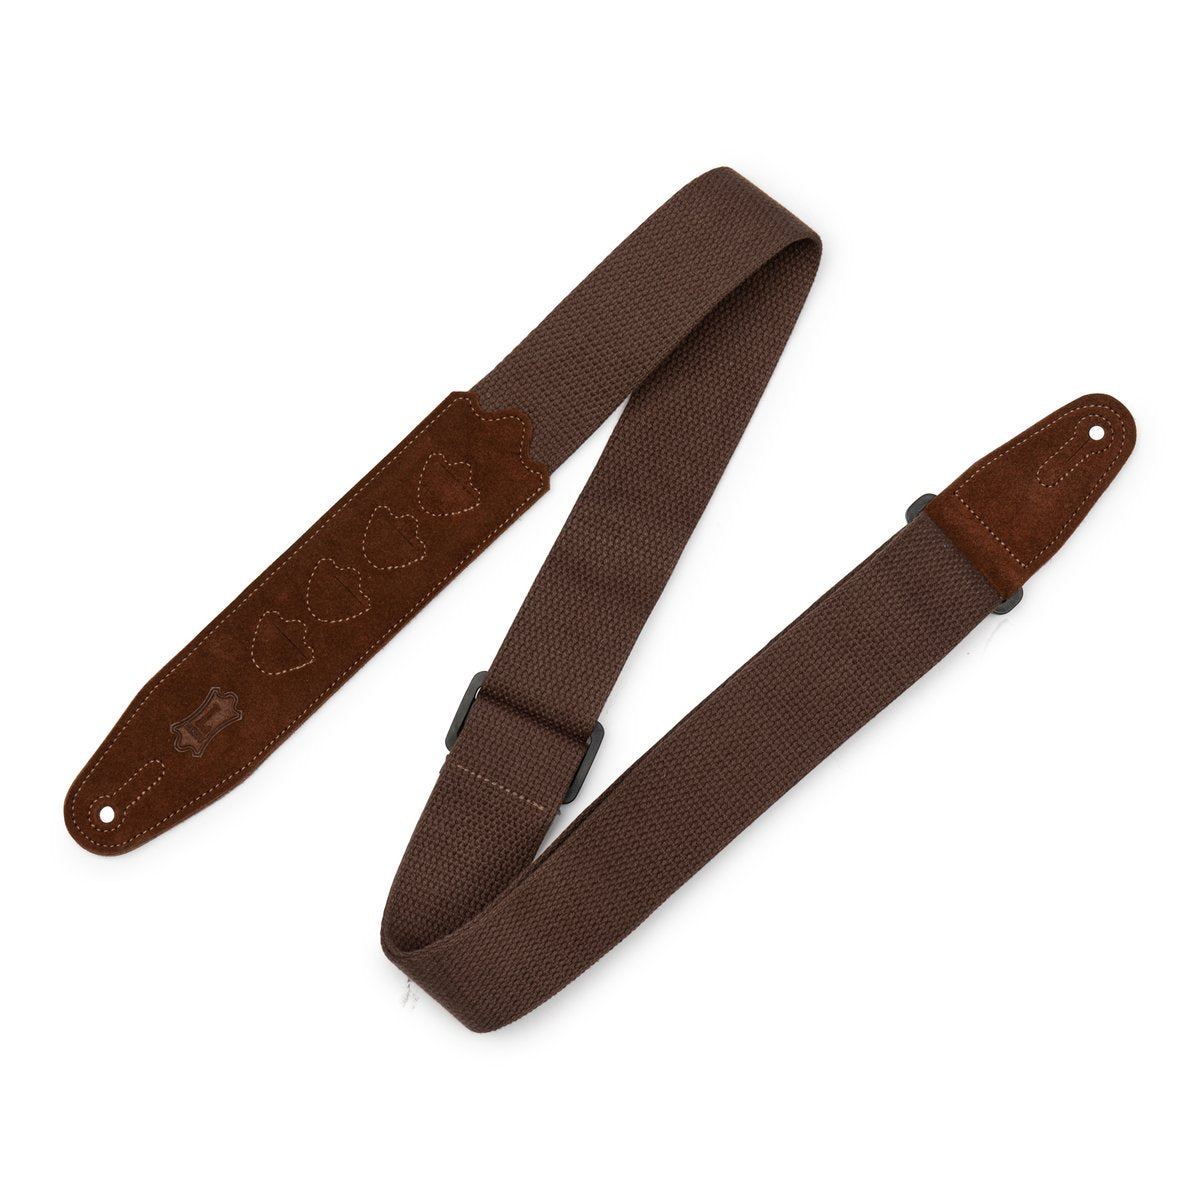 2" Brown Cotton Pick Holder strap